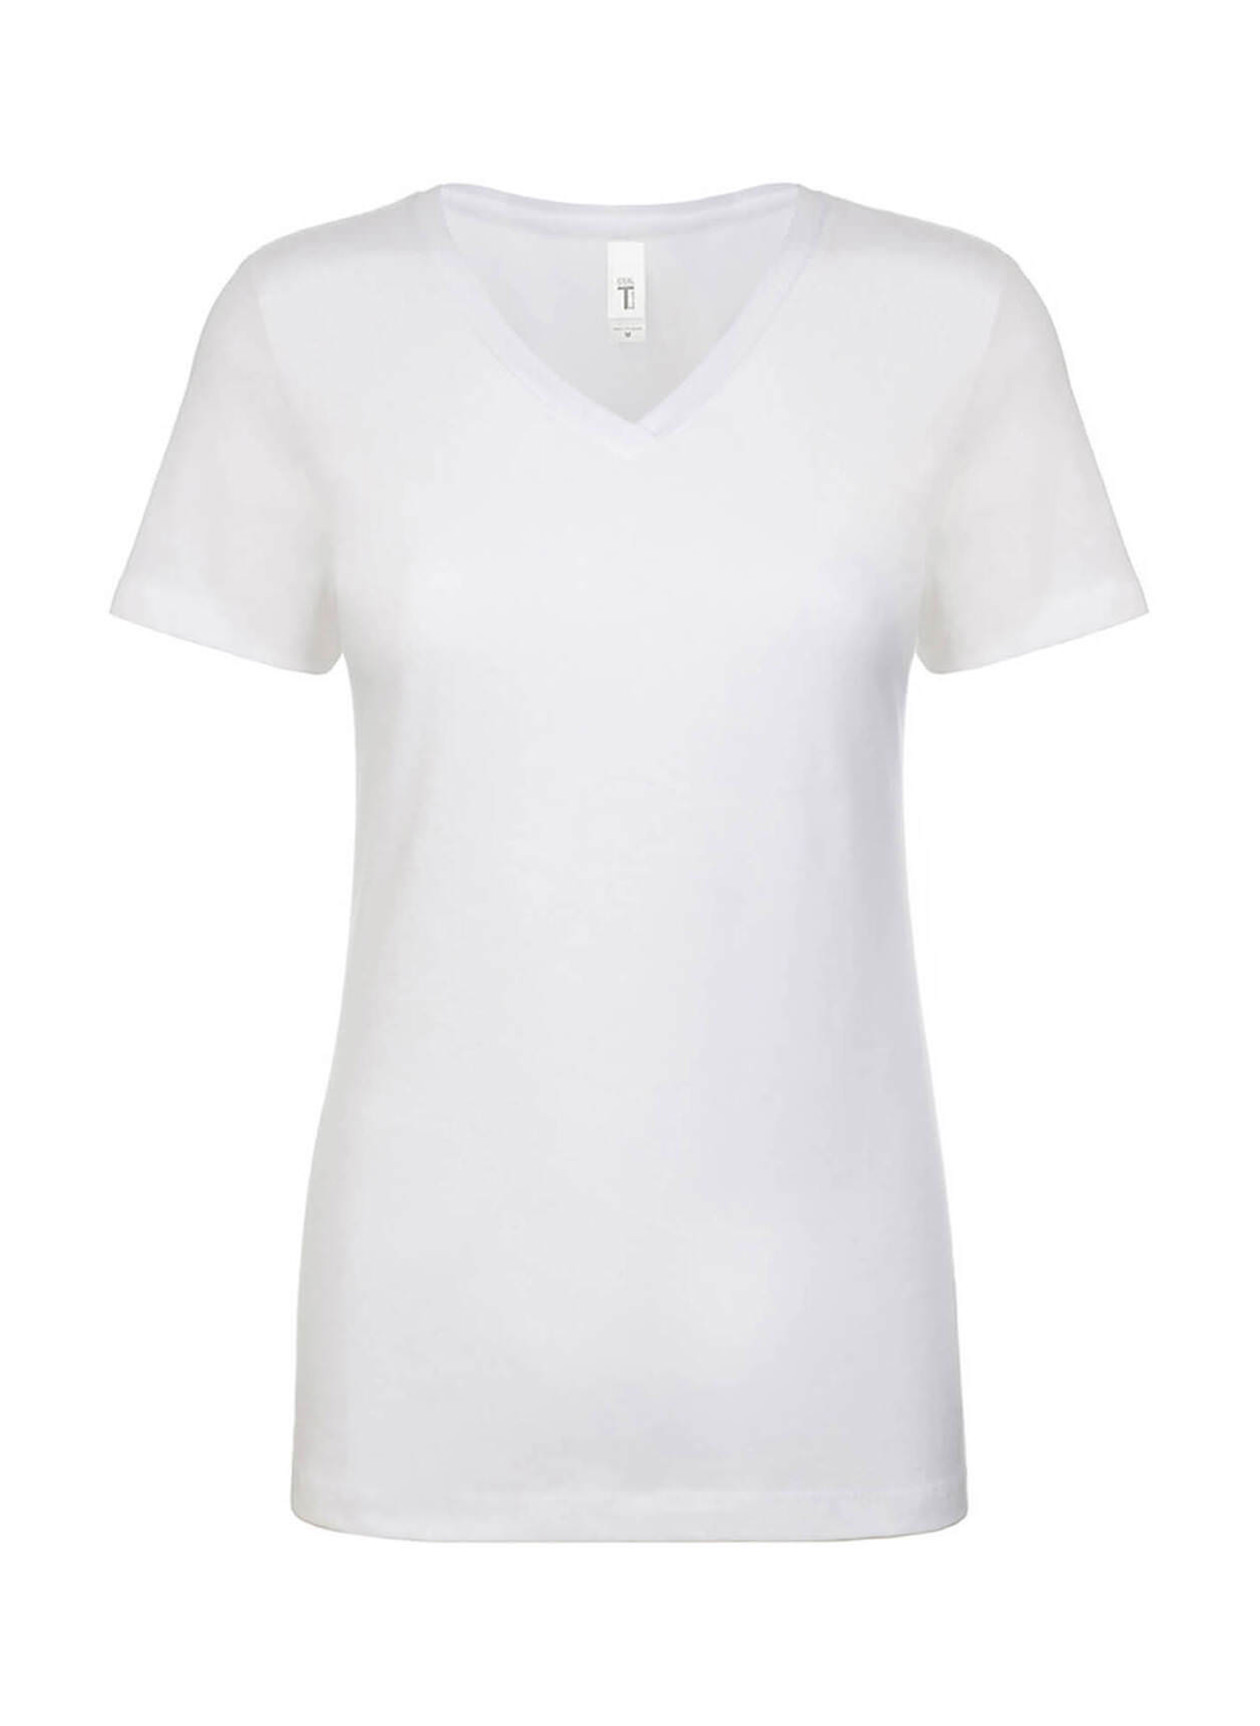 Next Level Women's White Ideal V-Neck T-Shirt